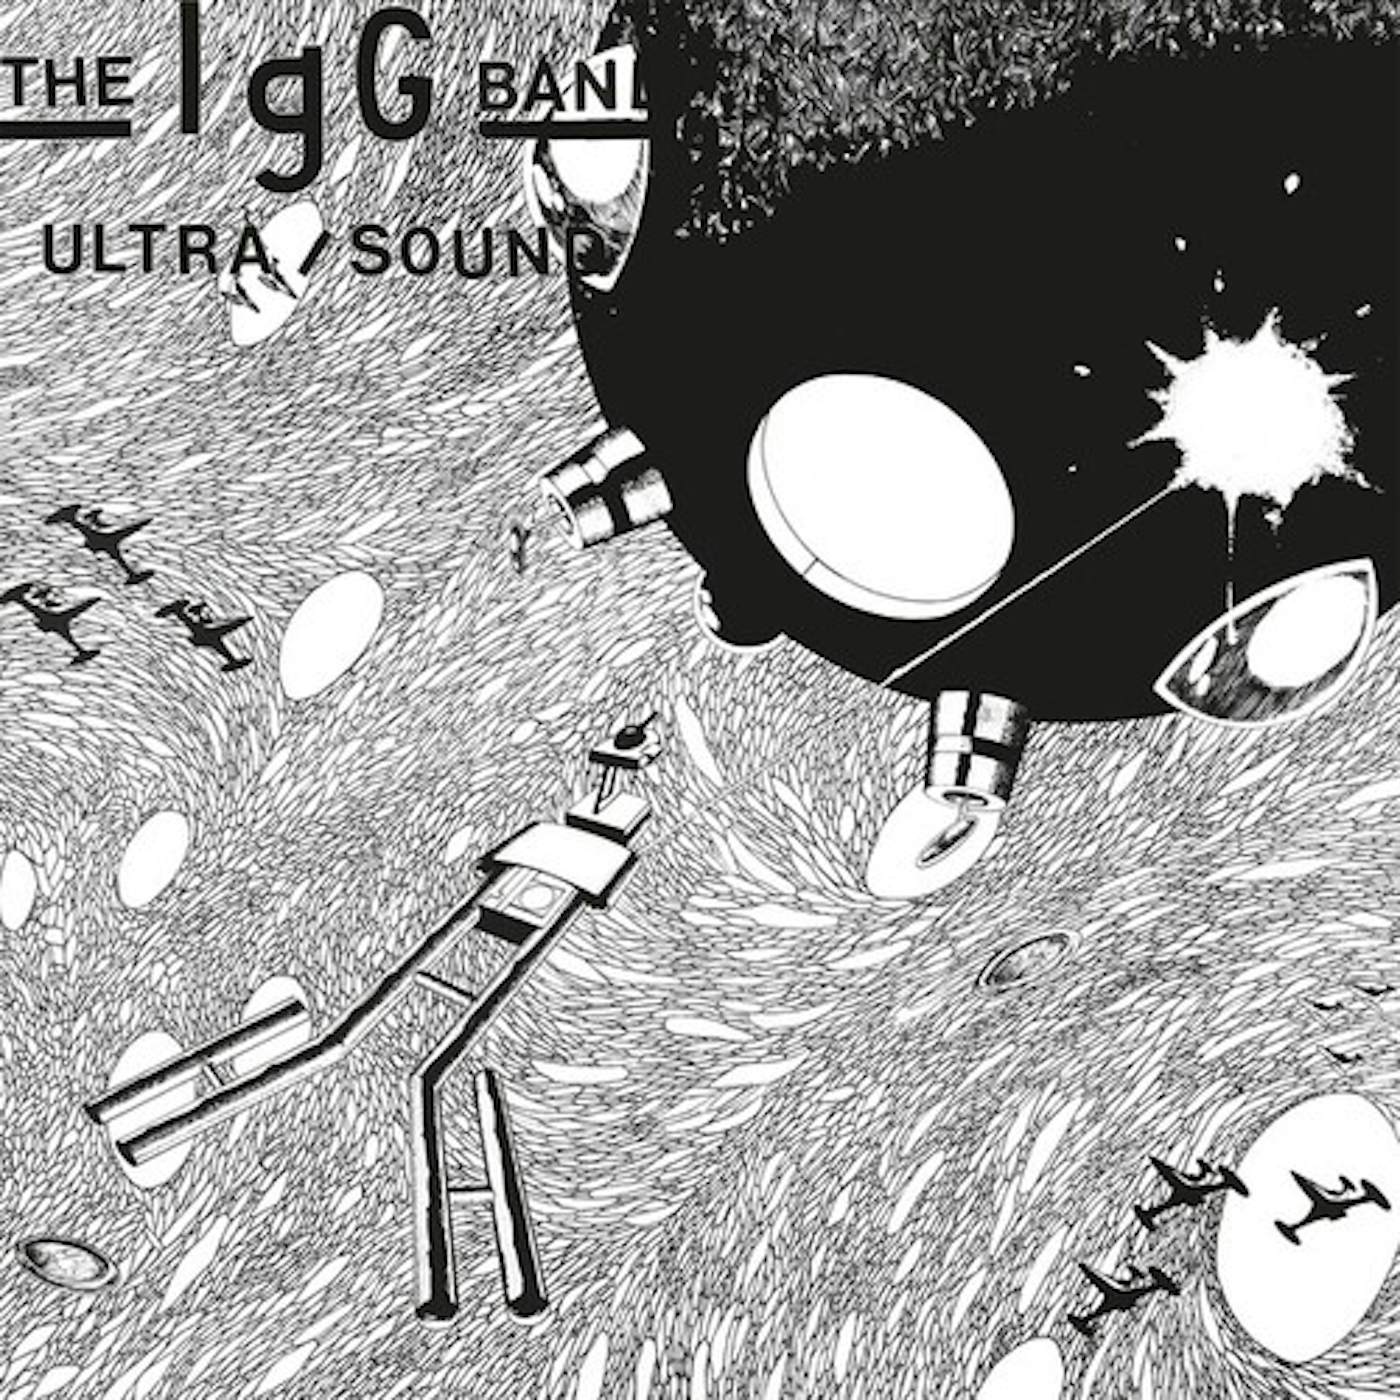 The IgG Band Ultra / Sound Vinyl Record